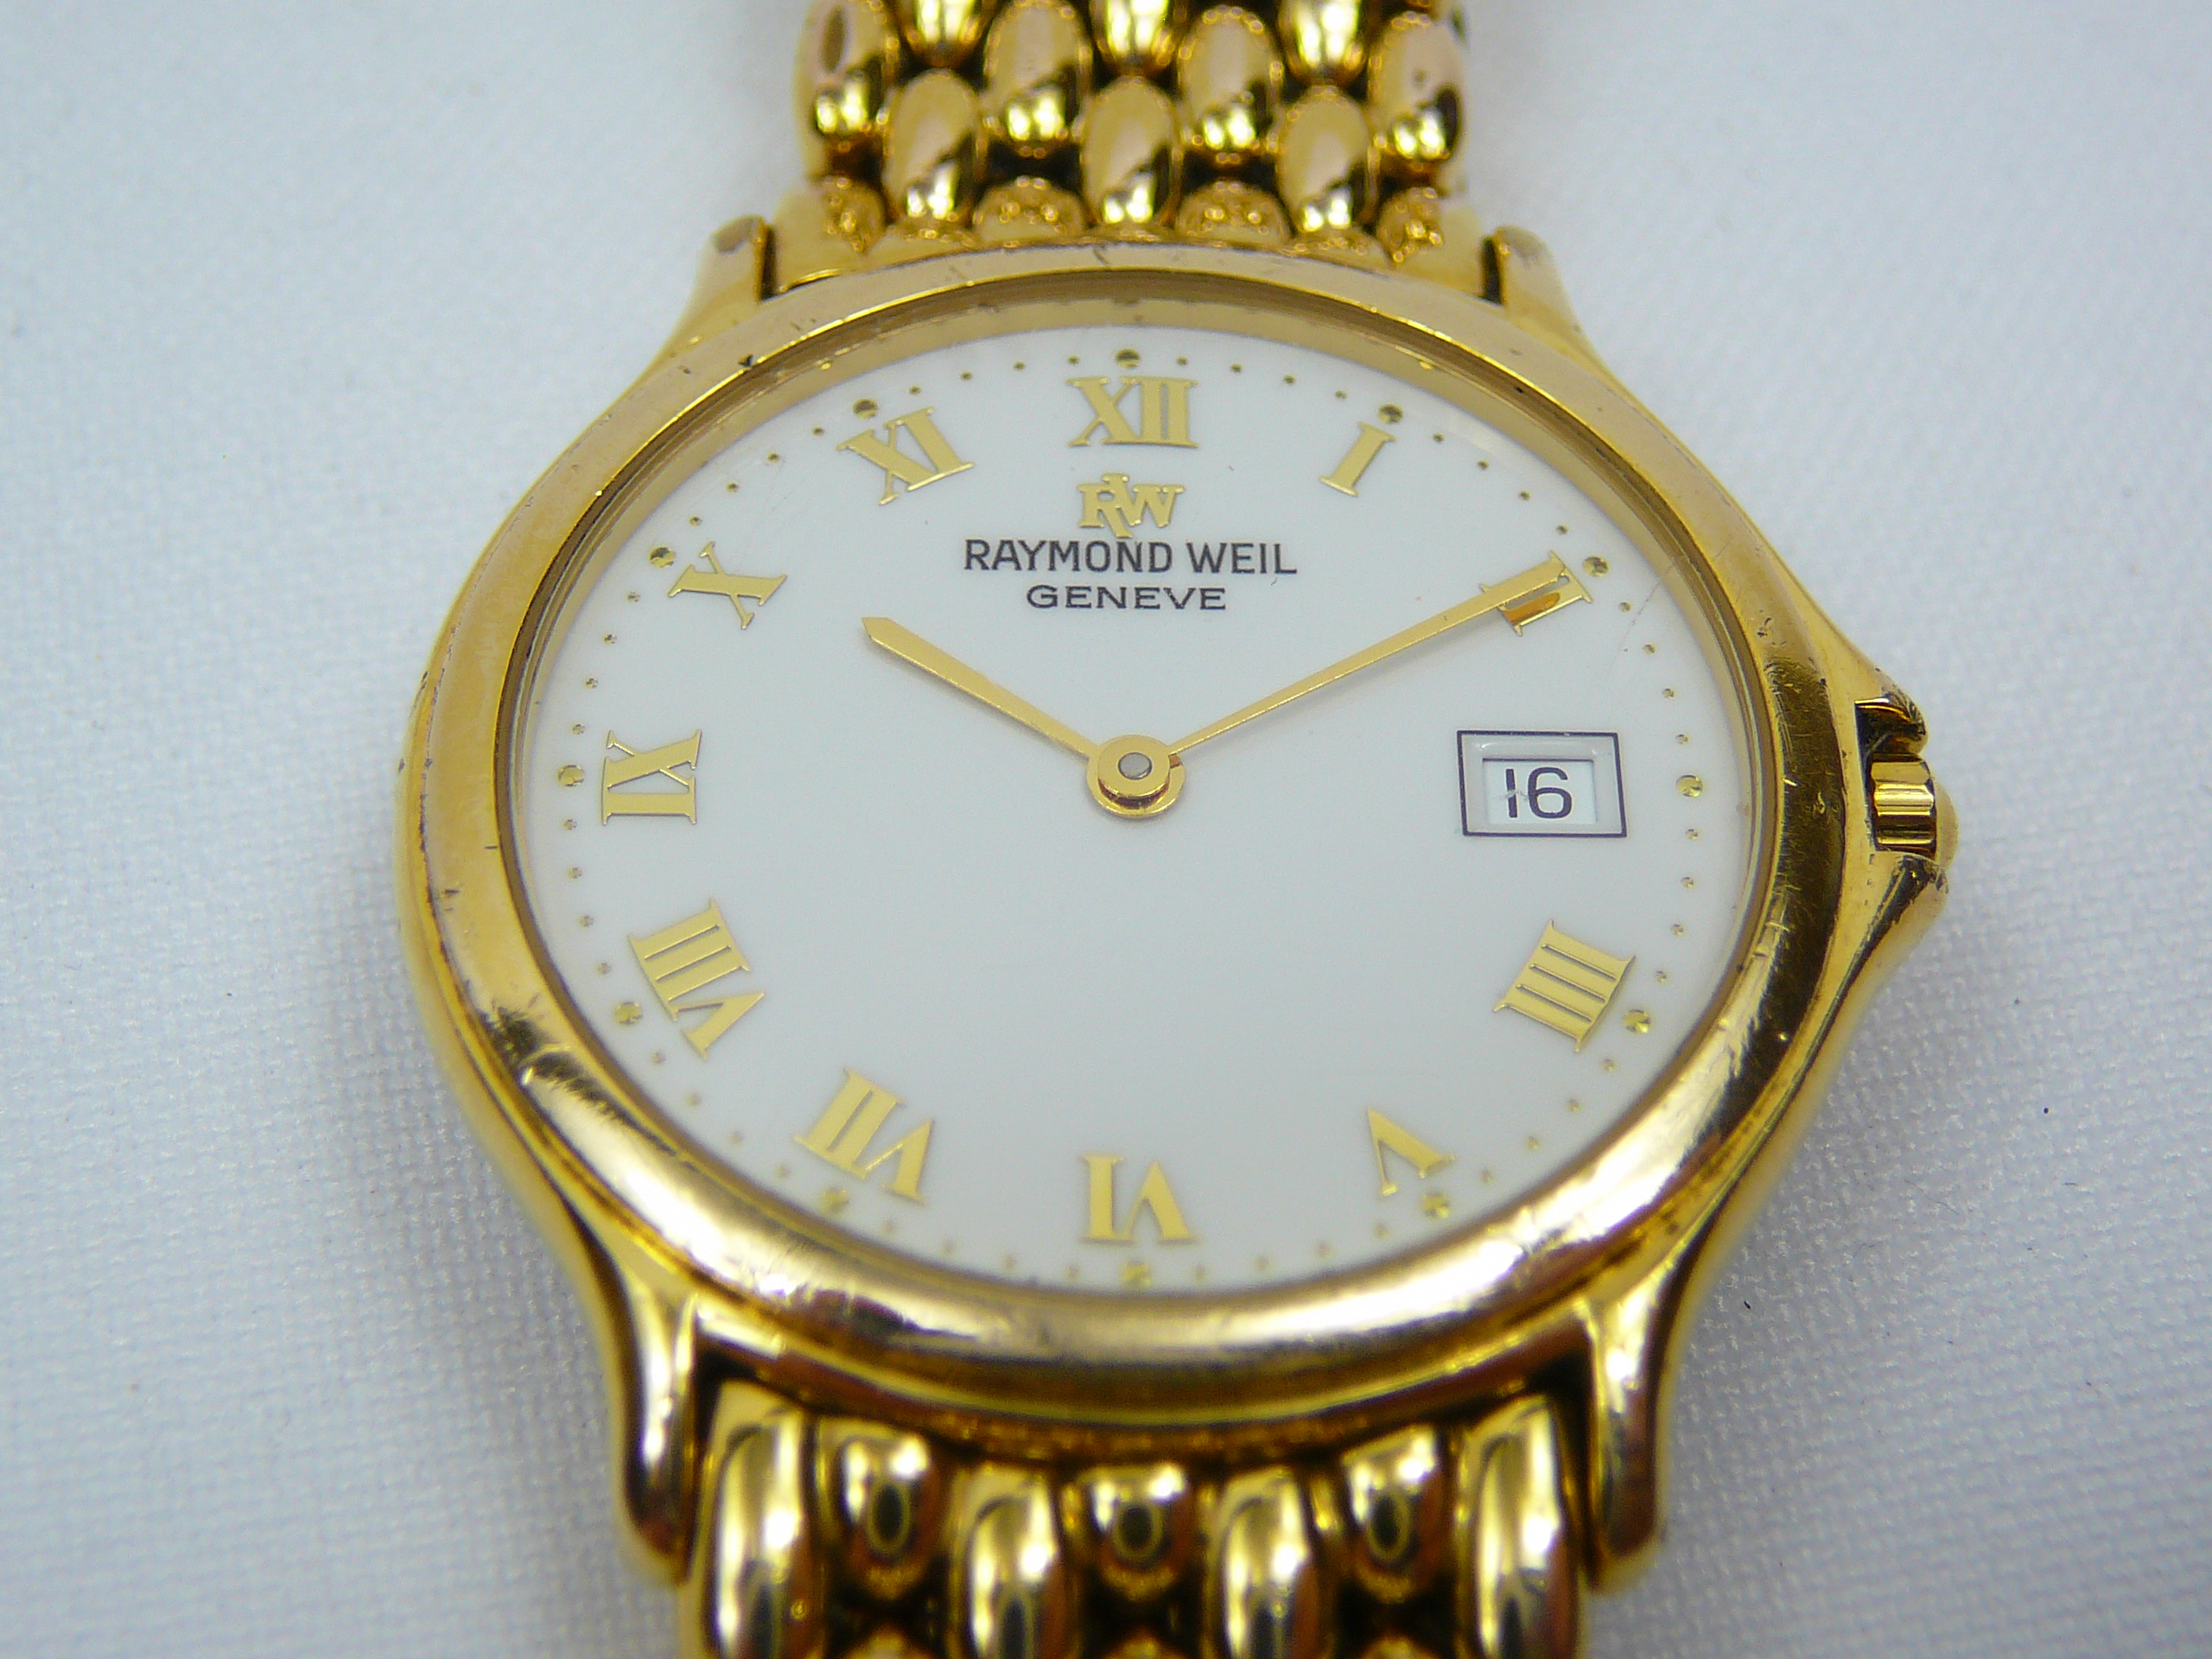 Gents Raymond Weil Wrist Watch - Image 2 of 3